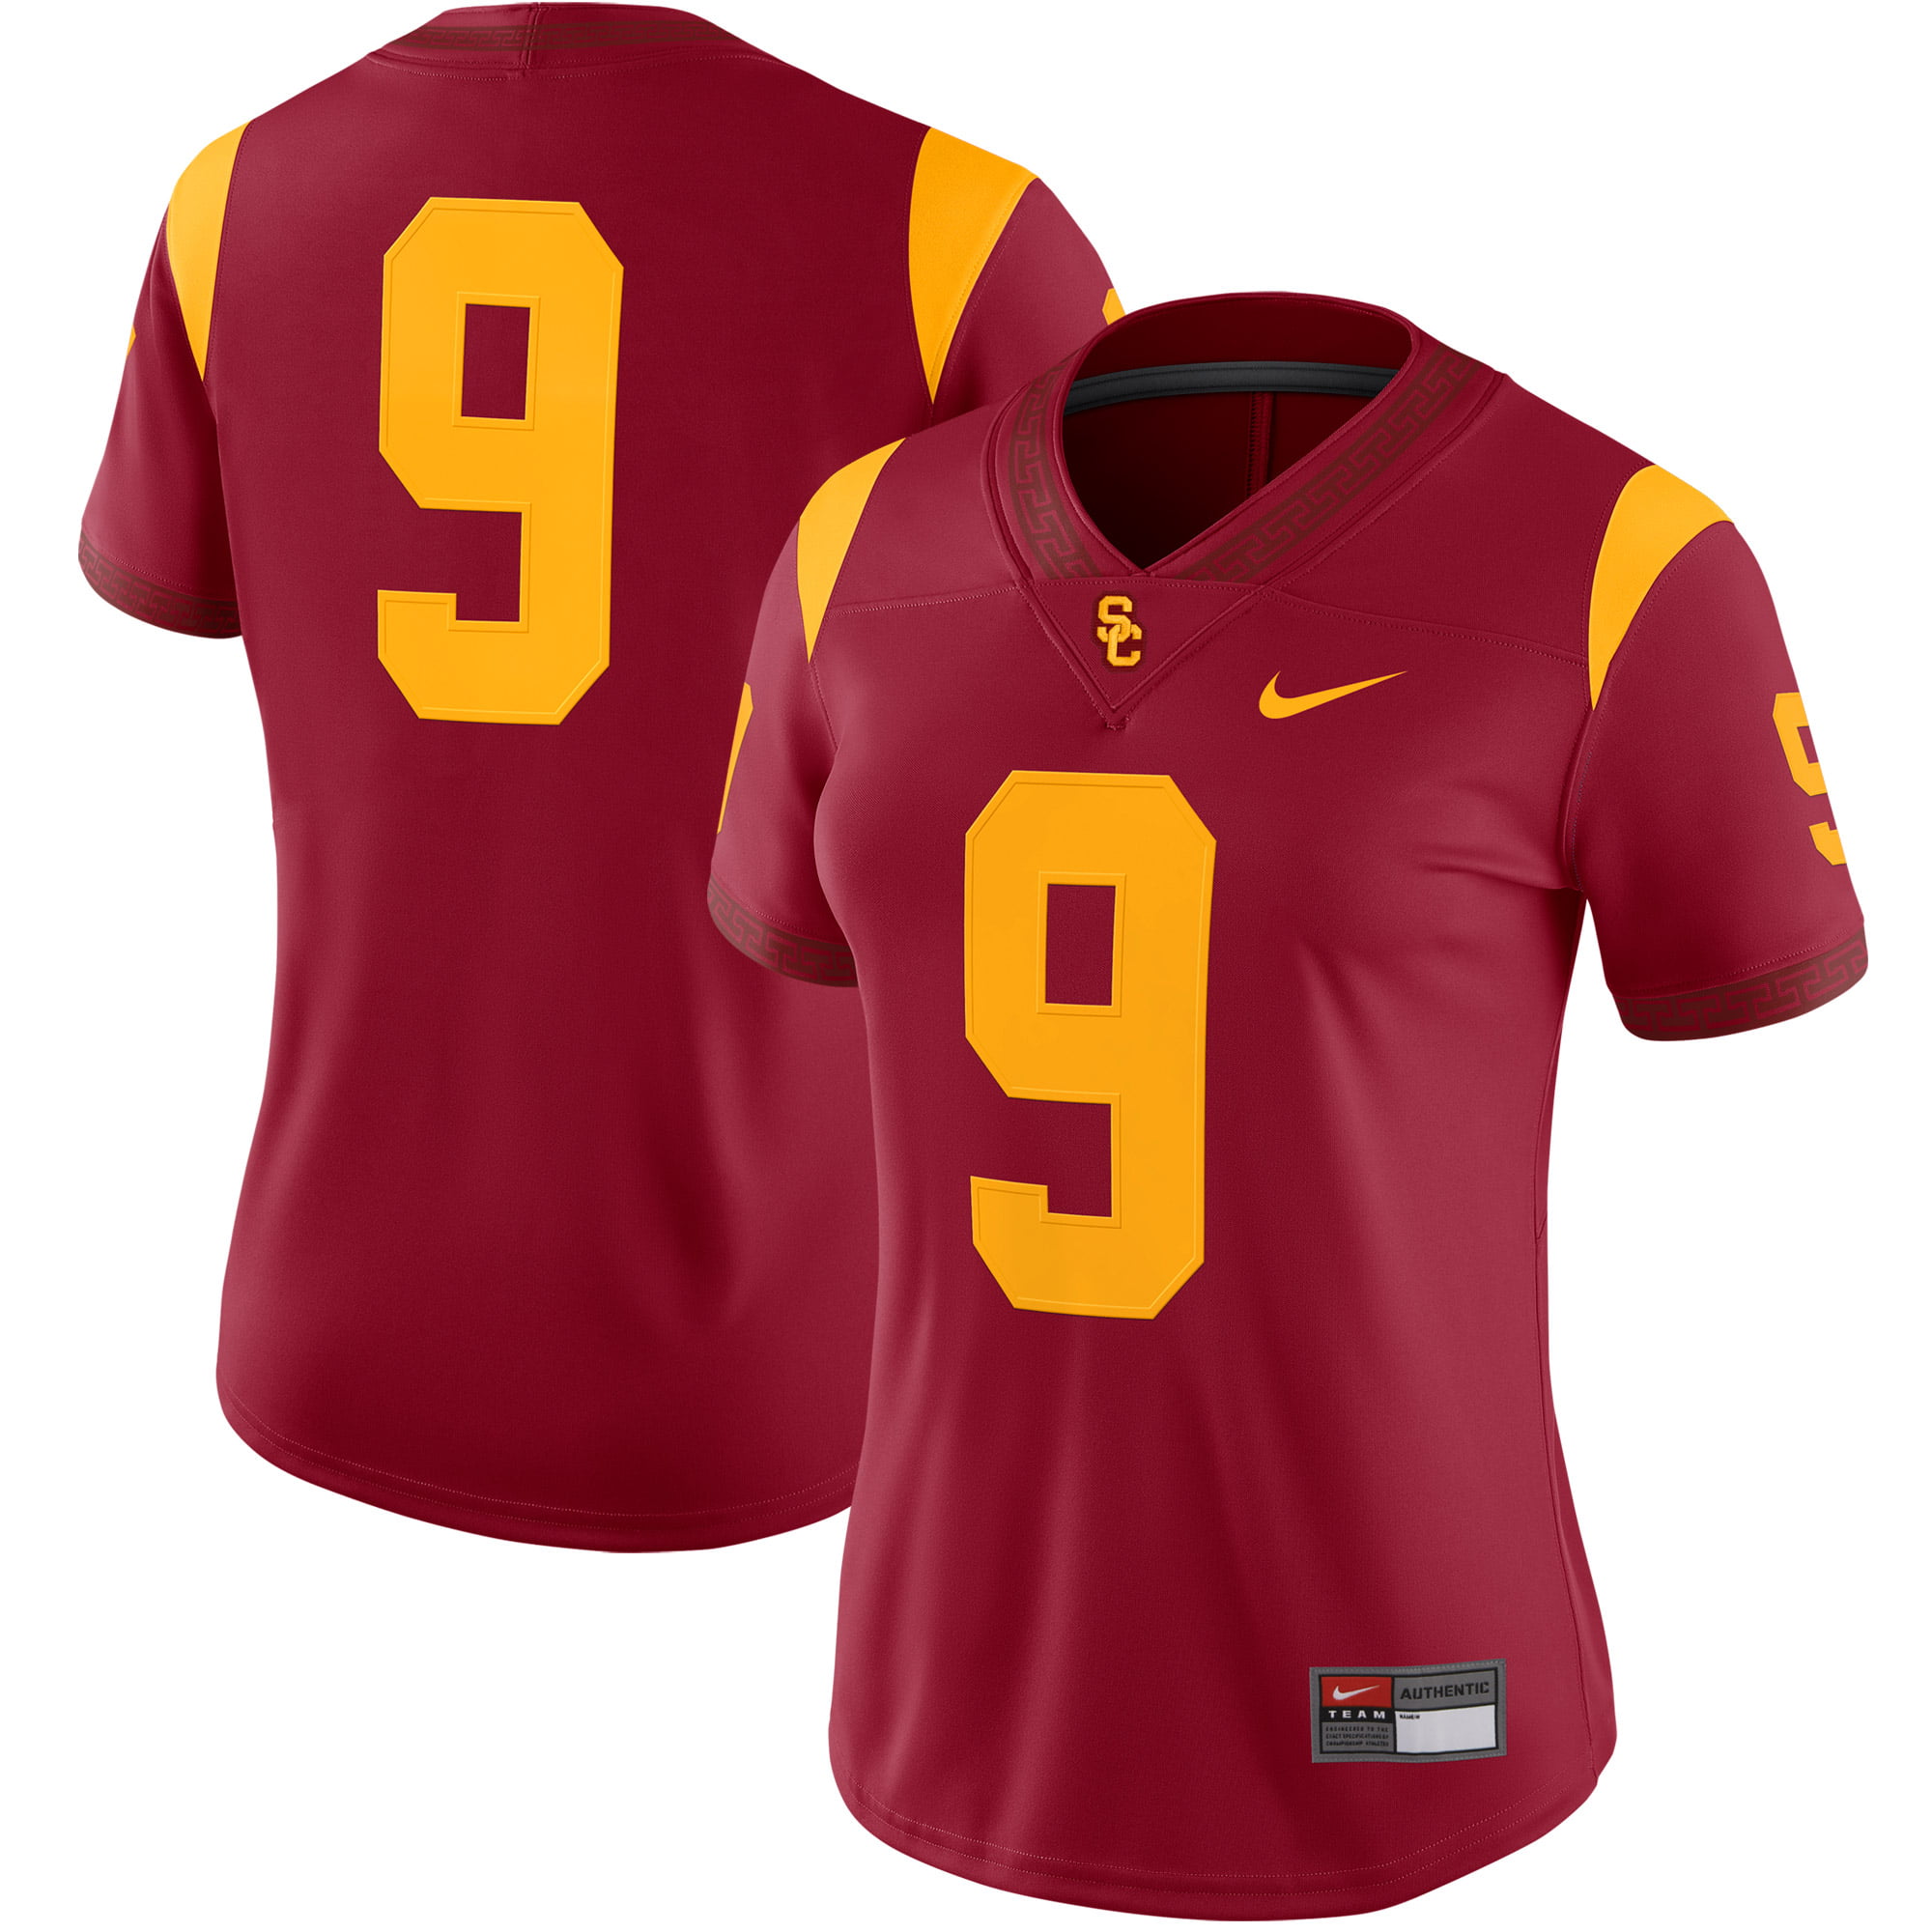 Women's Nike #9 Cardinal USC Trojans Game Football Jersey - Walmart.com